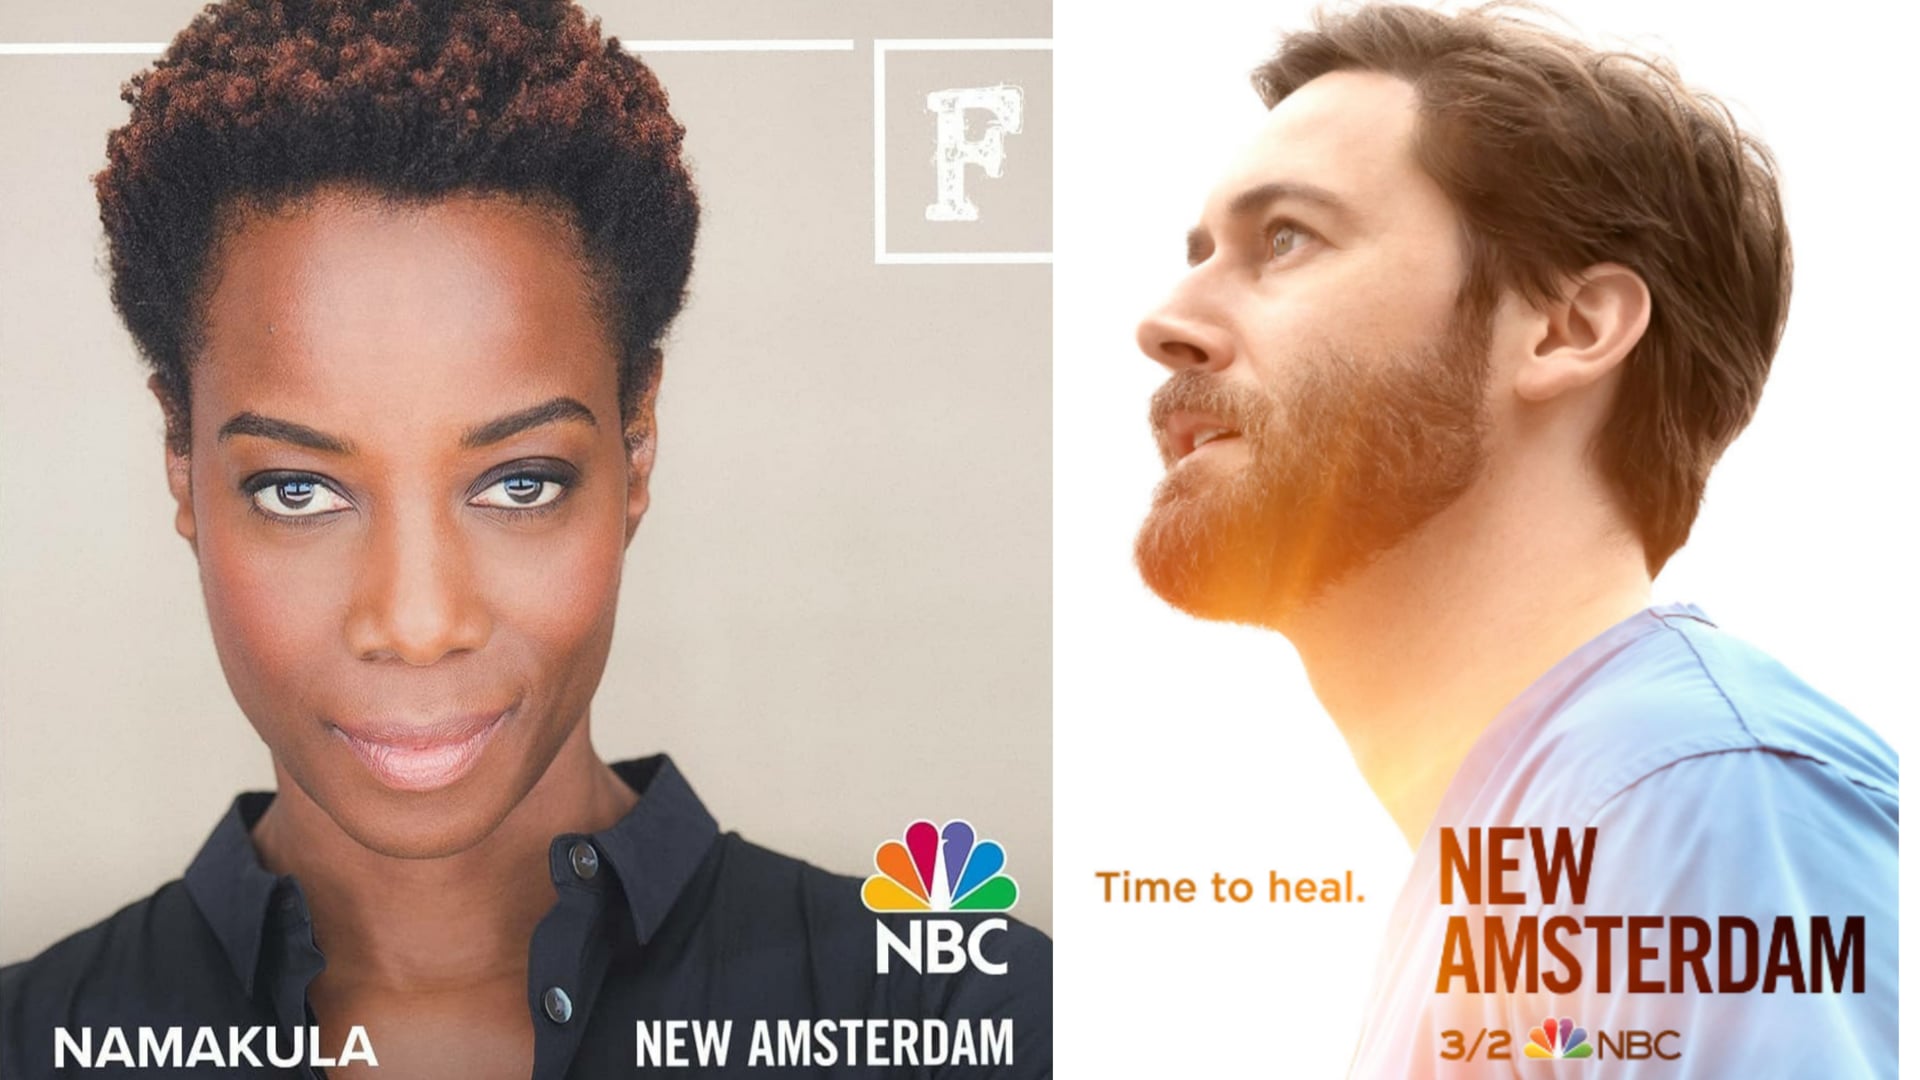 NBC | New Amsterdam S3 Premiere "The New Normal" | Co-Star